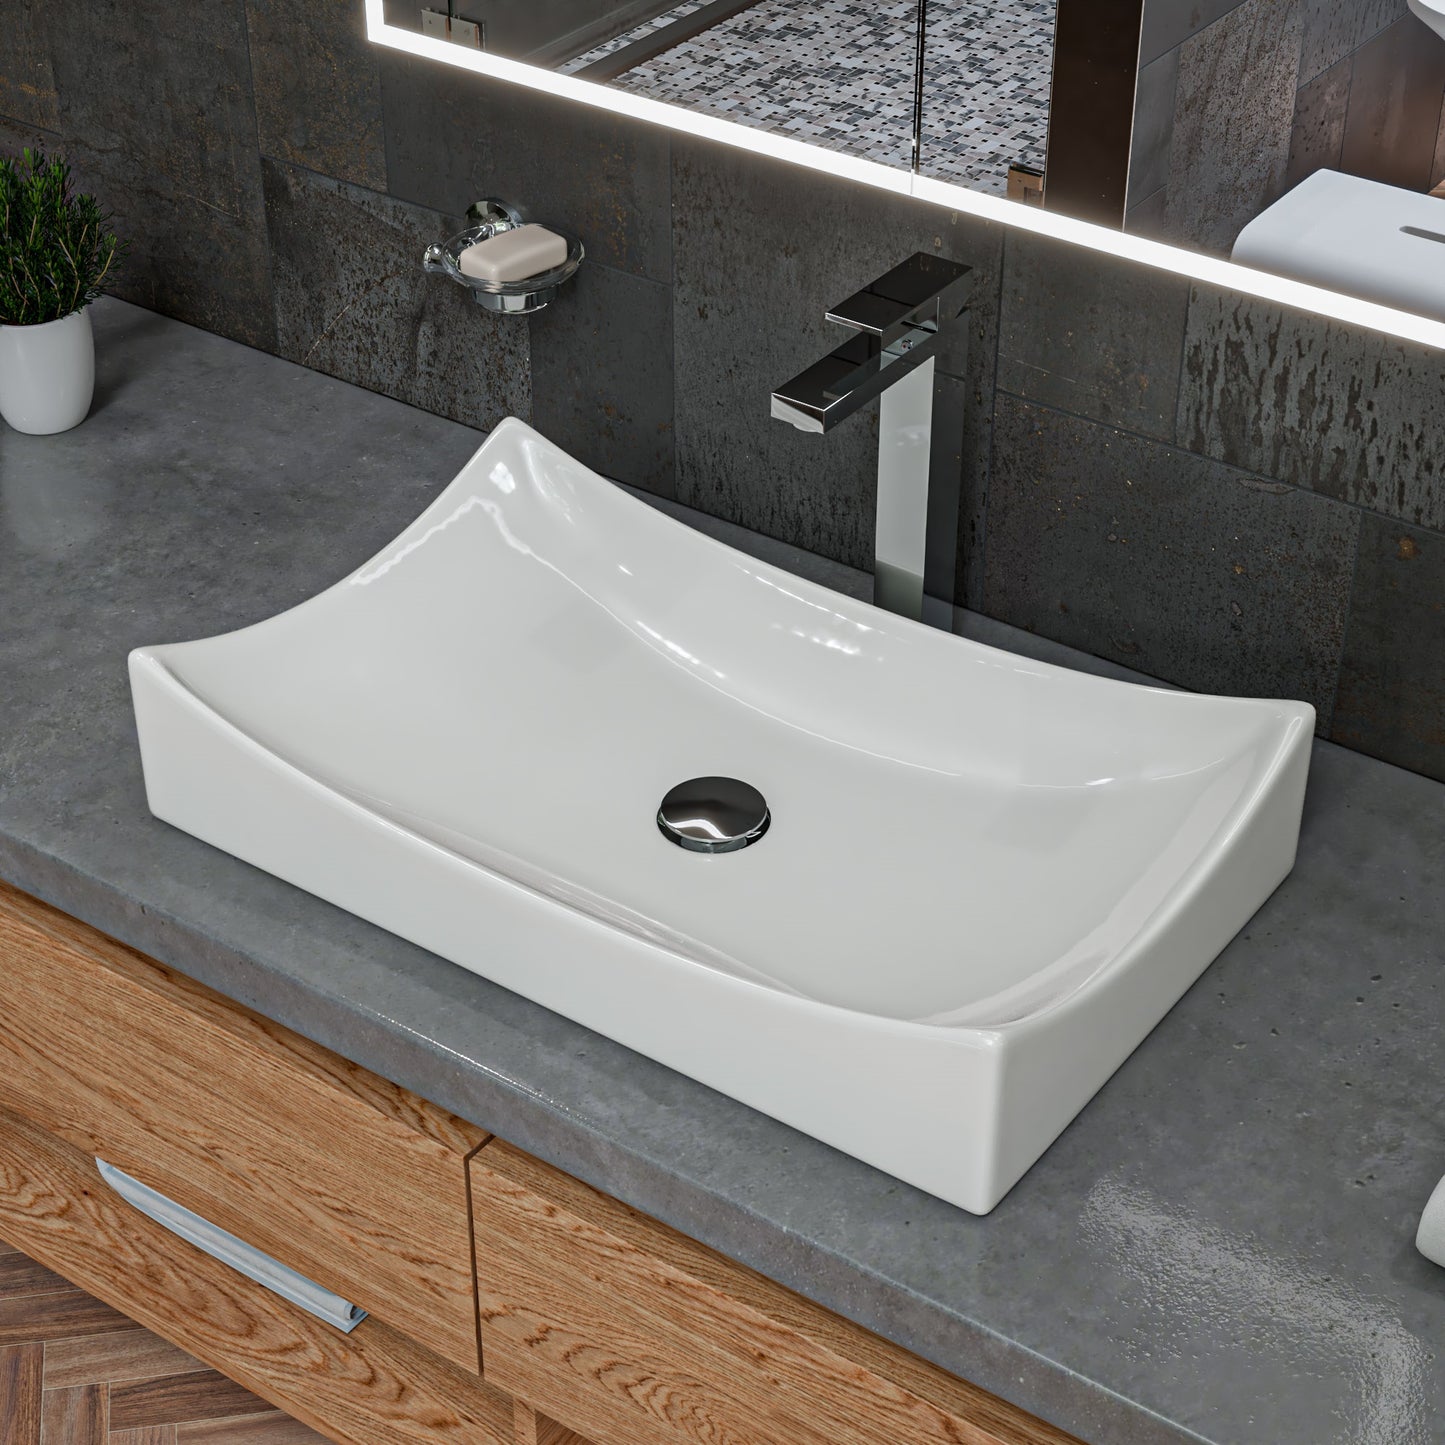 Polished Chrome Tall Square Single Lever Bathroom Faucet, Polished Chrome, AB1129-PC